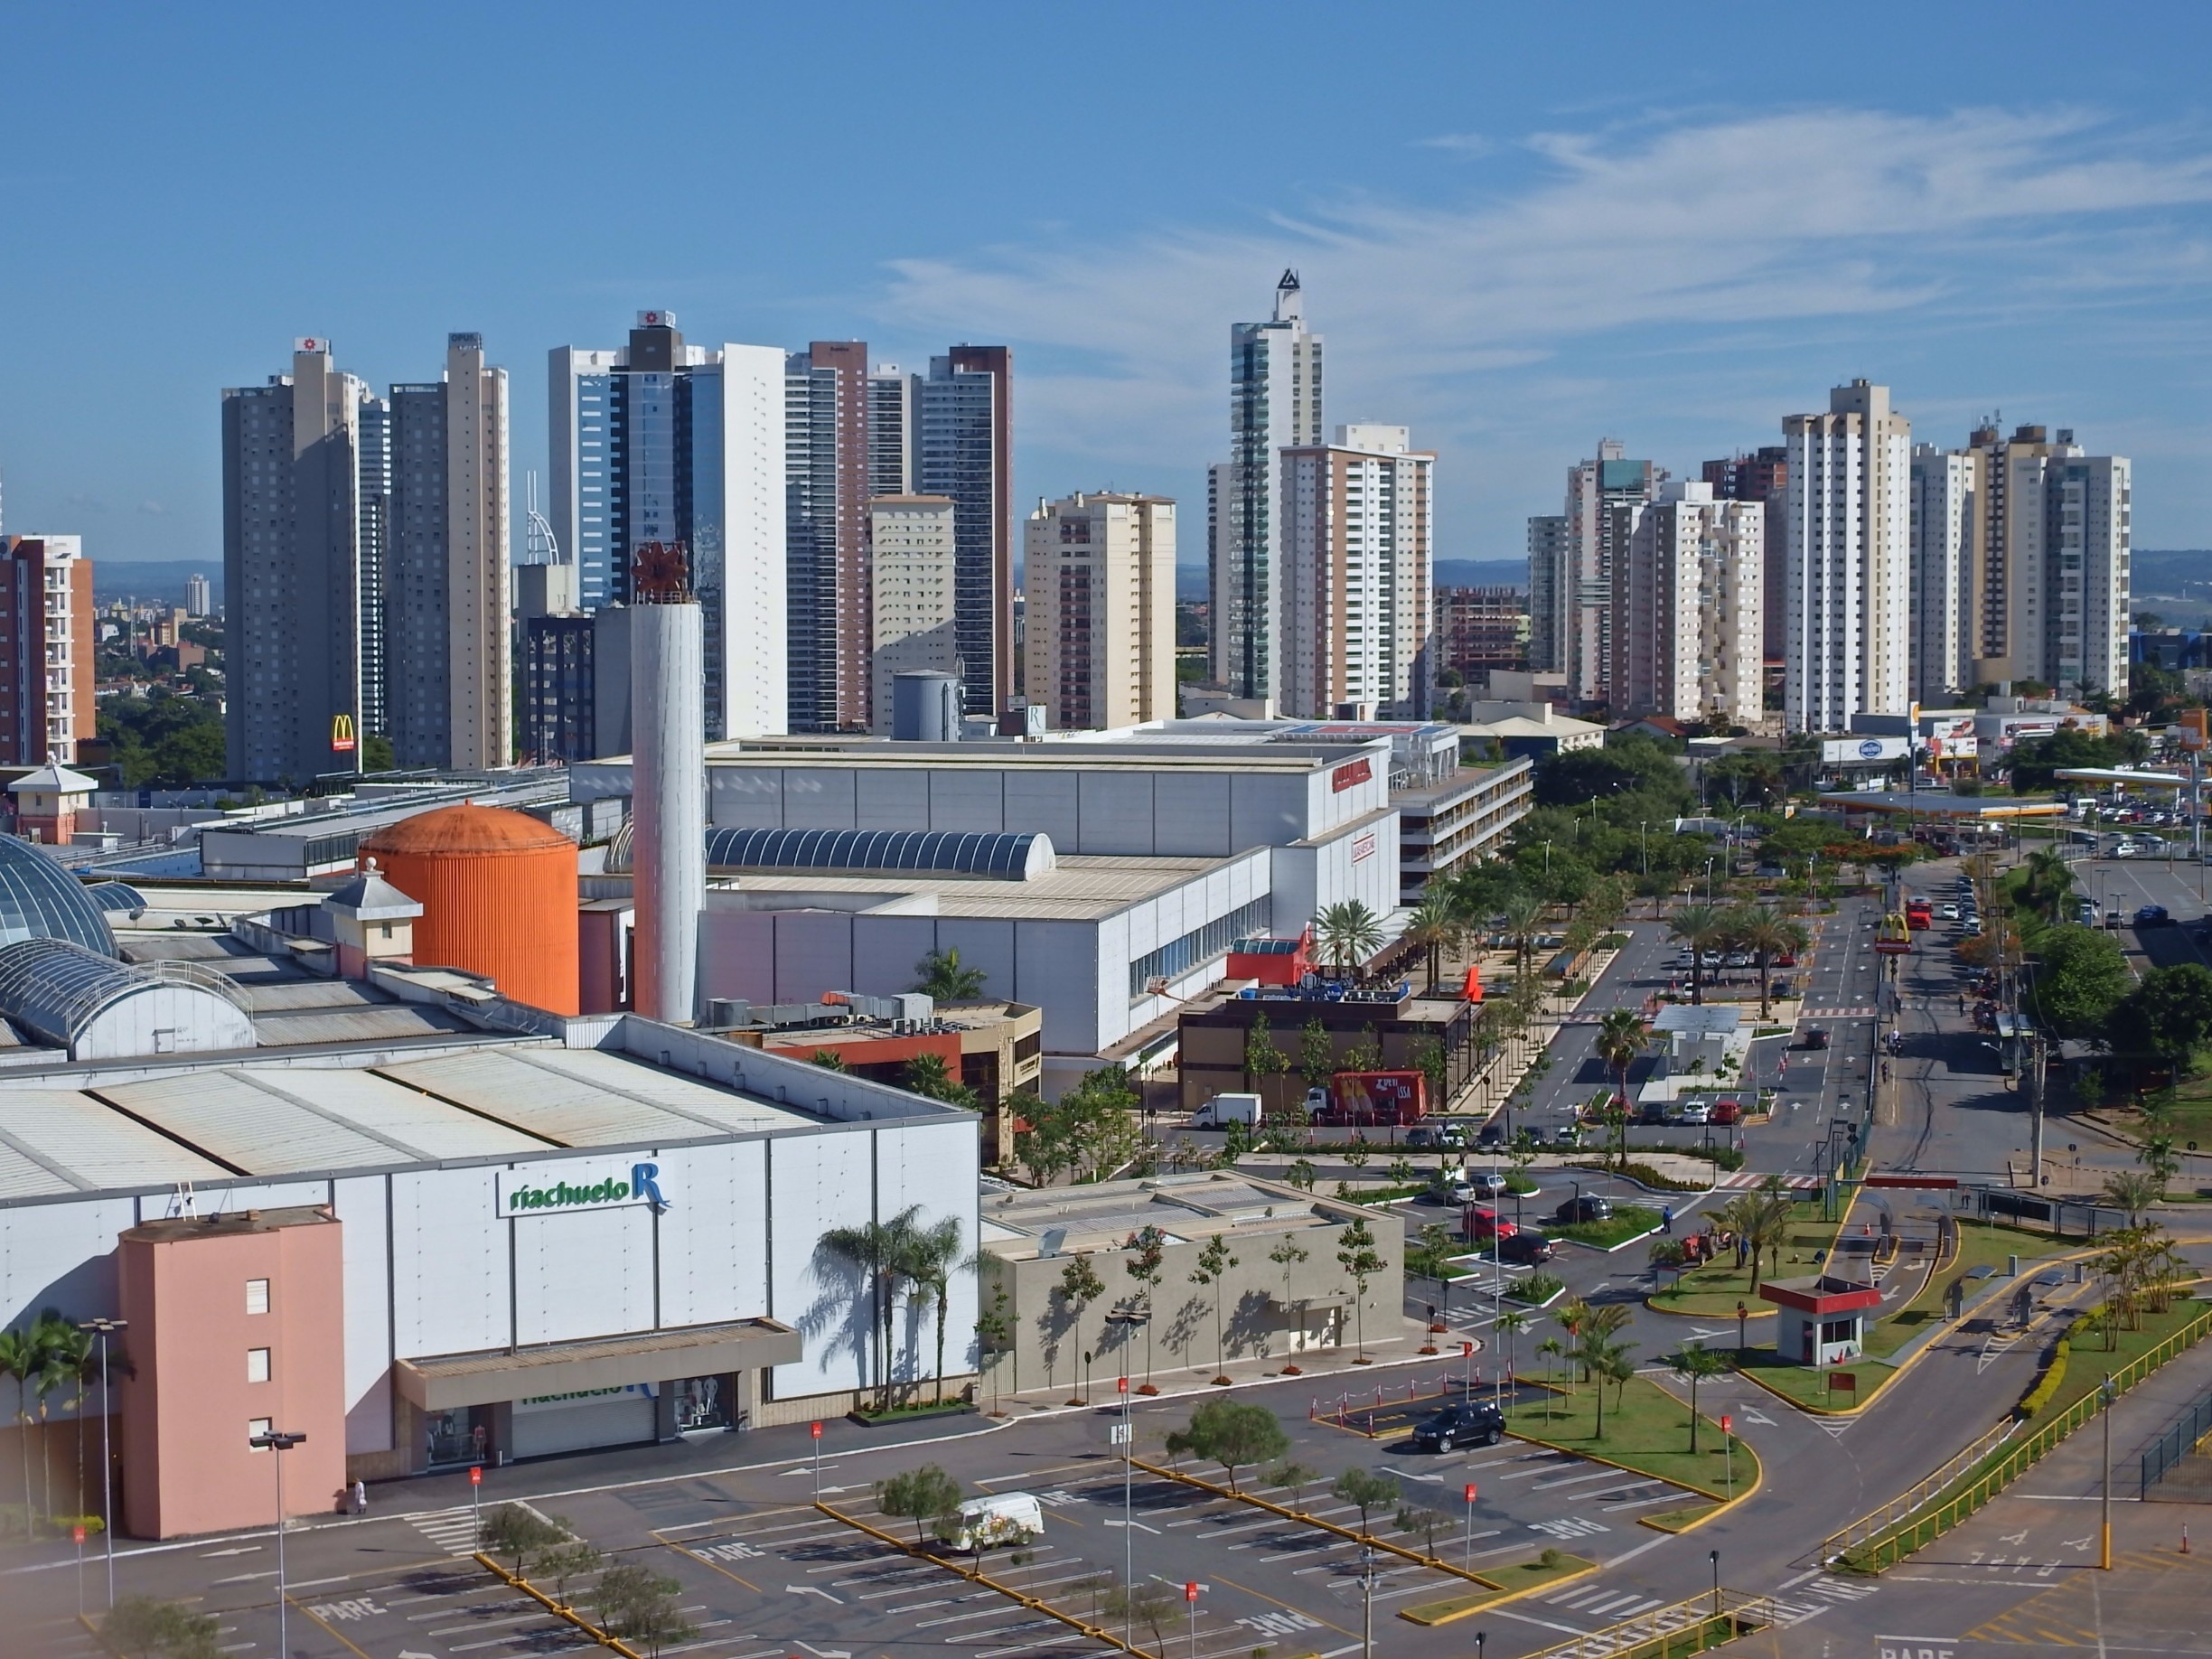 Goiânia, cidade centro-oeste brasileiro.
Brazilian midwest city.